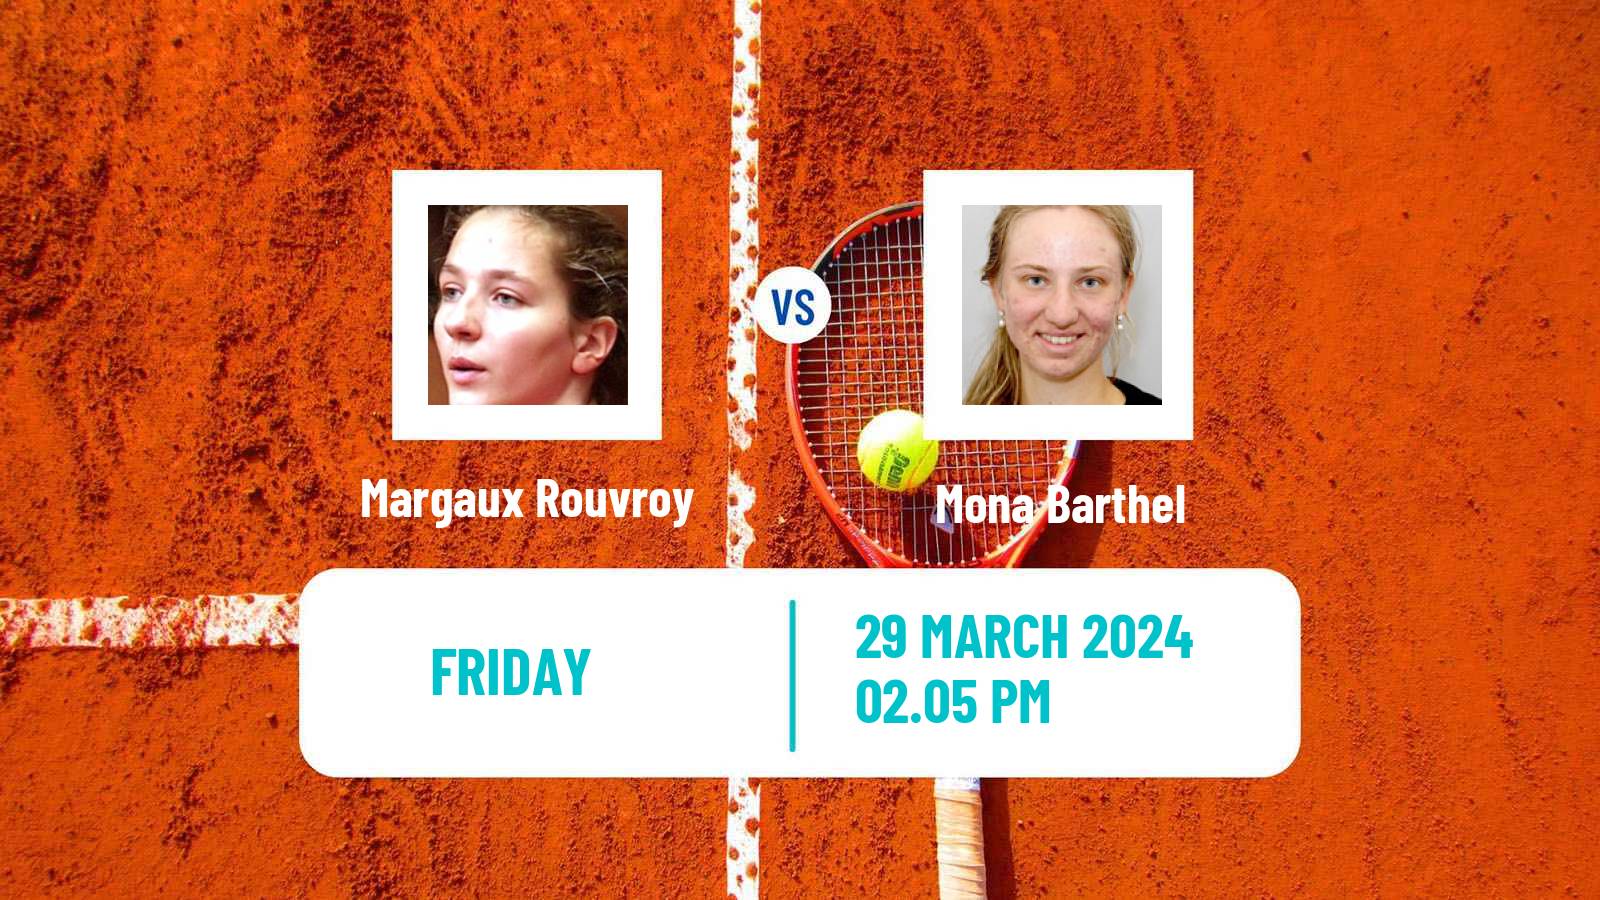 Tennis ITF W75 Croissy Beaubourg Women Margaux Rouvroy - Mona Barthel